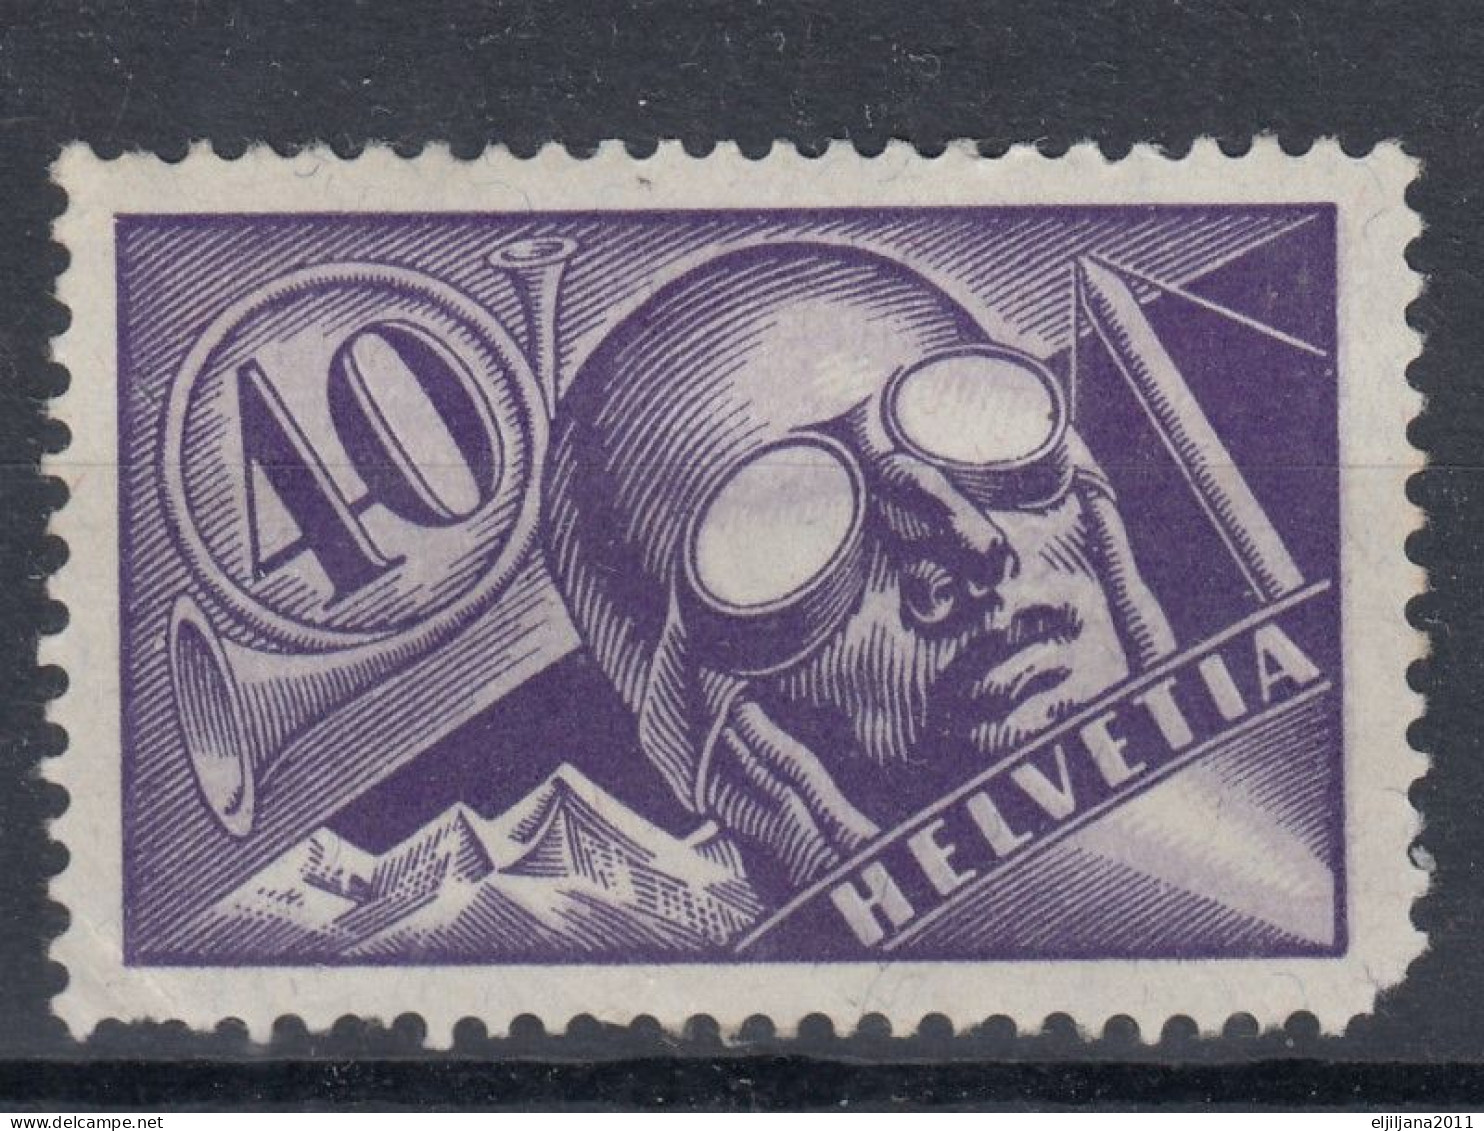 Switzerland / Helvetia / Schweiz / Suisse 1923 ⁕ Pilot - Airmail 40 C. Mi.182 ⁕ 1v MH (damaged) - Unused Stamps